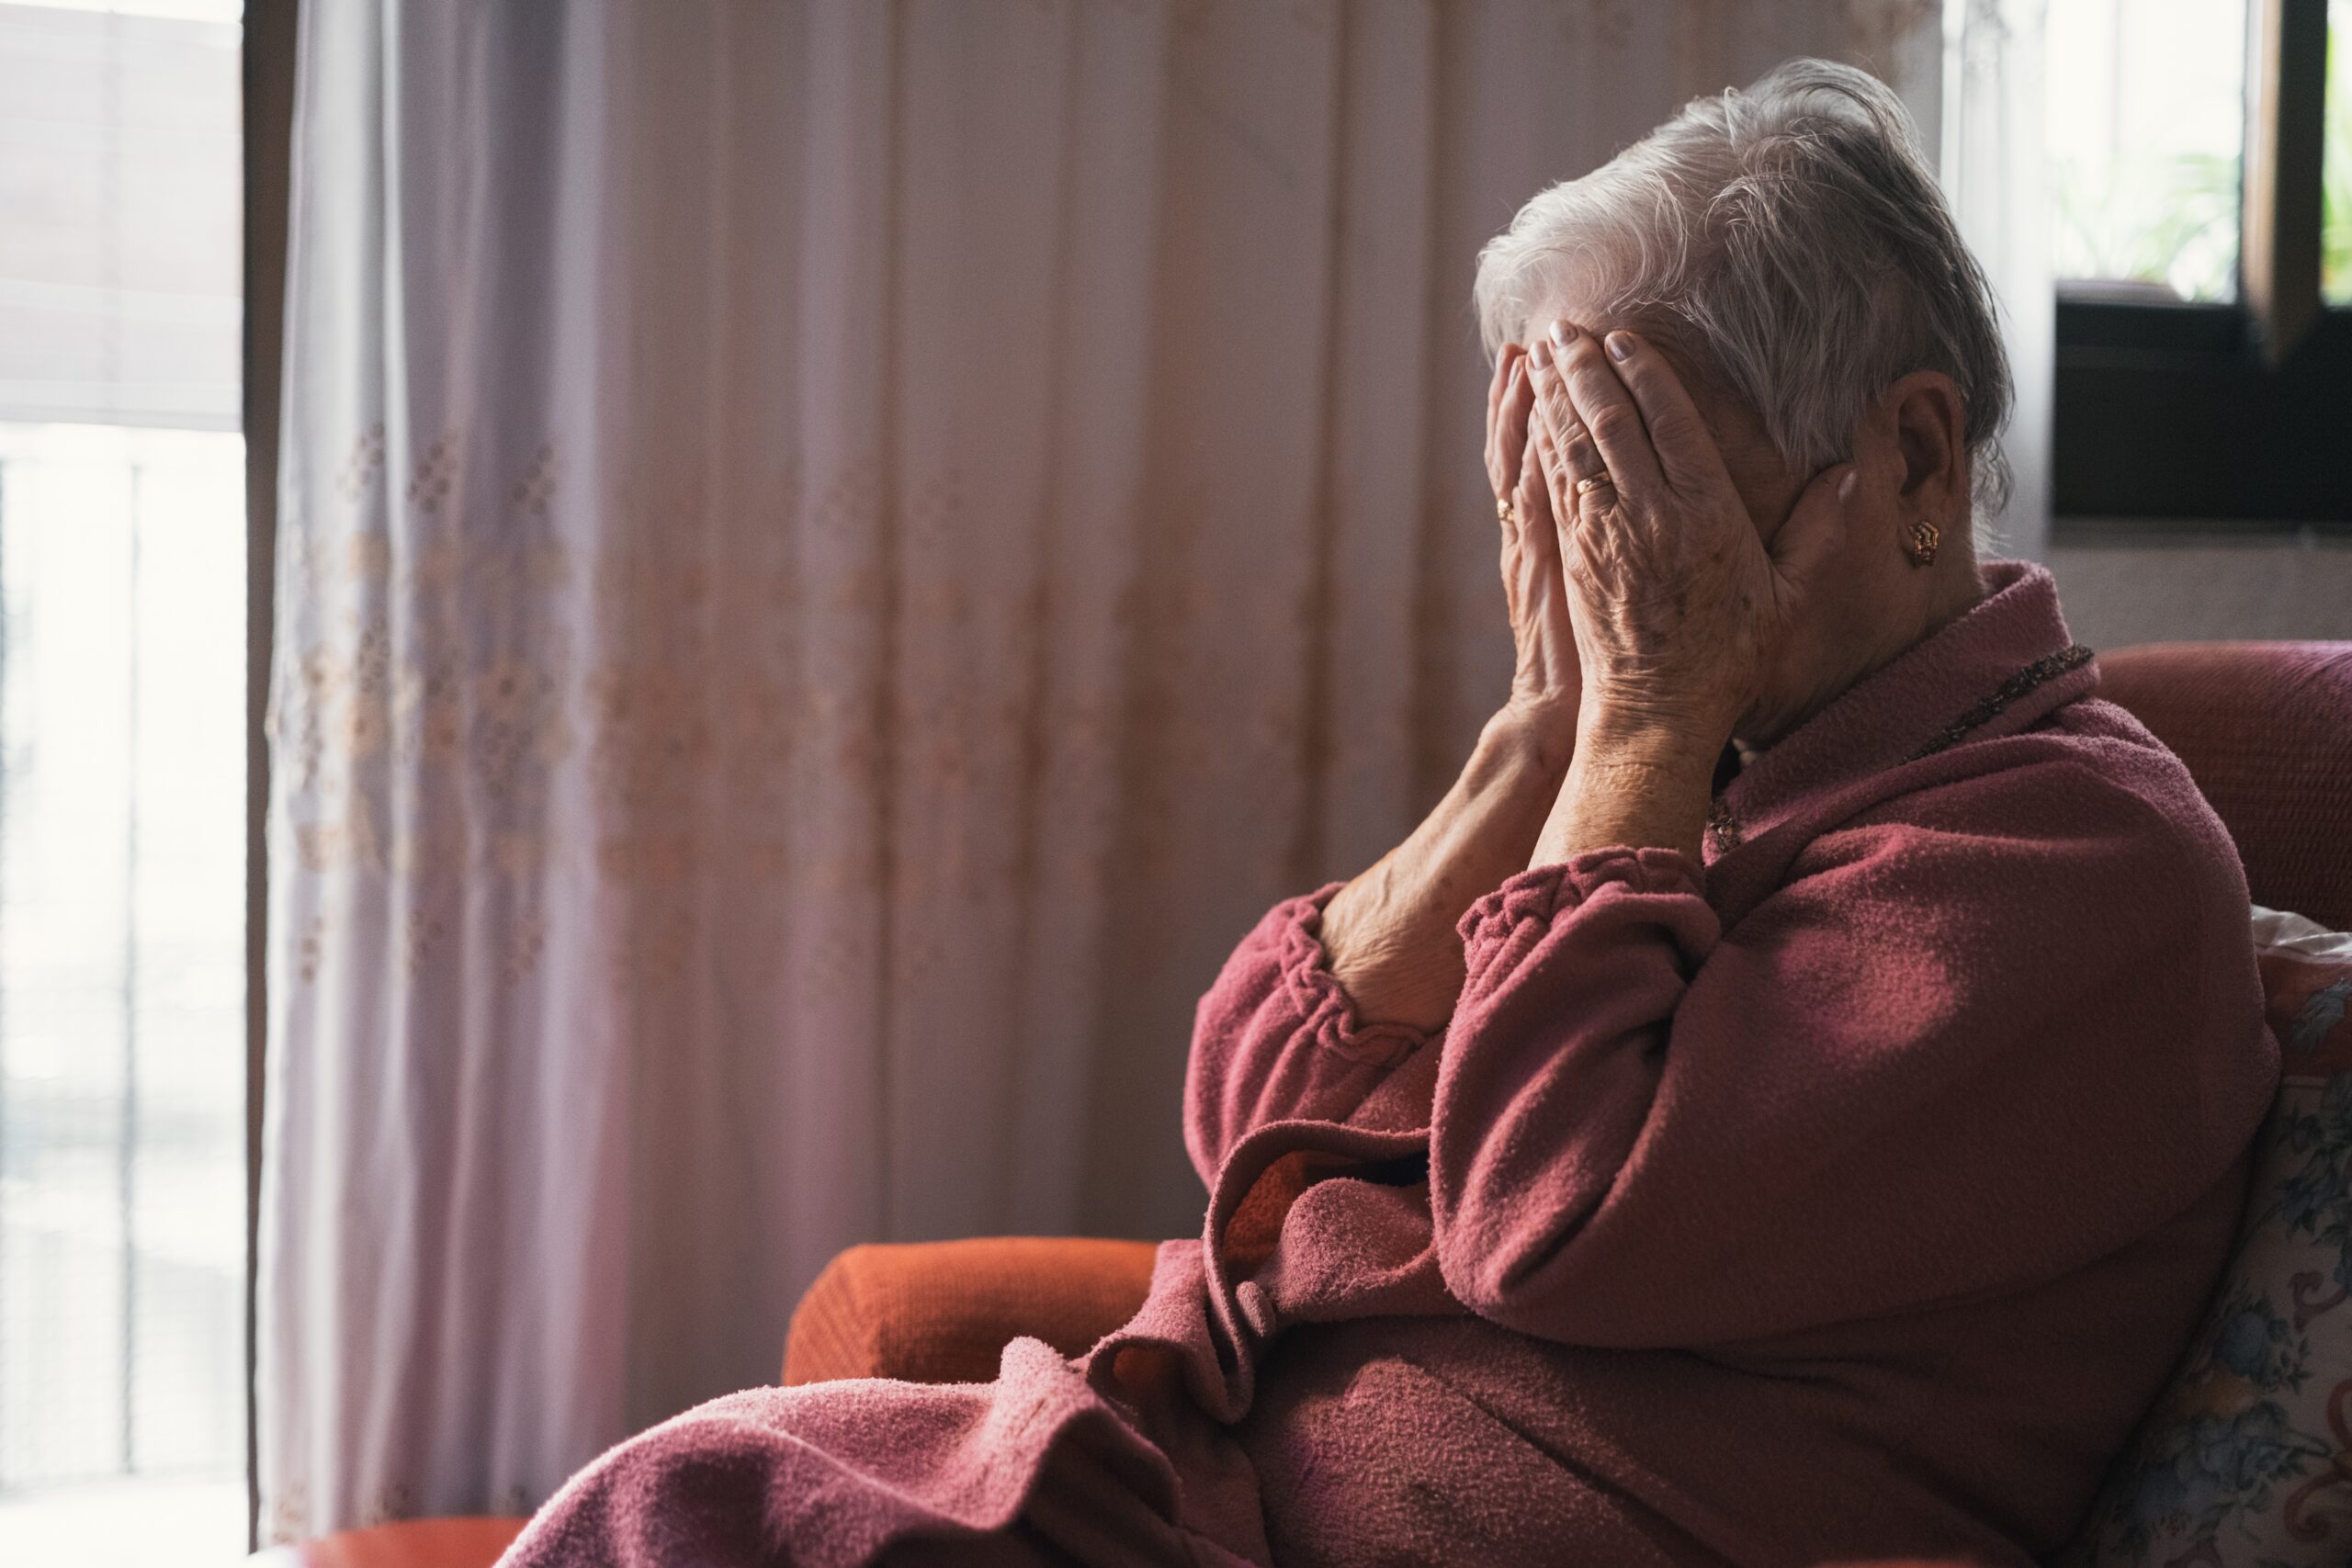 A sad elderly woman | Source: Shutterstock